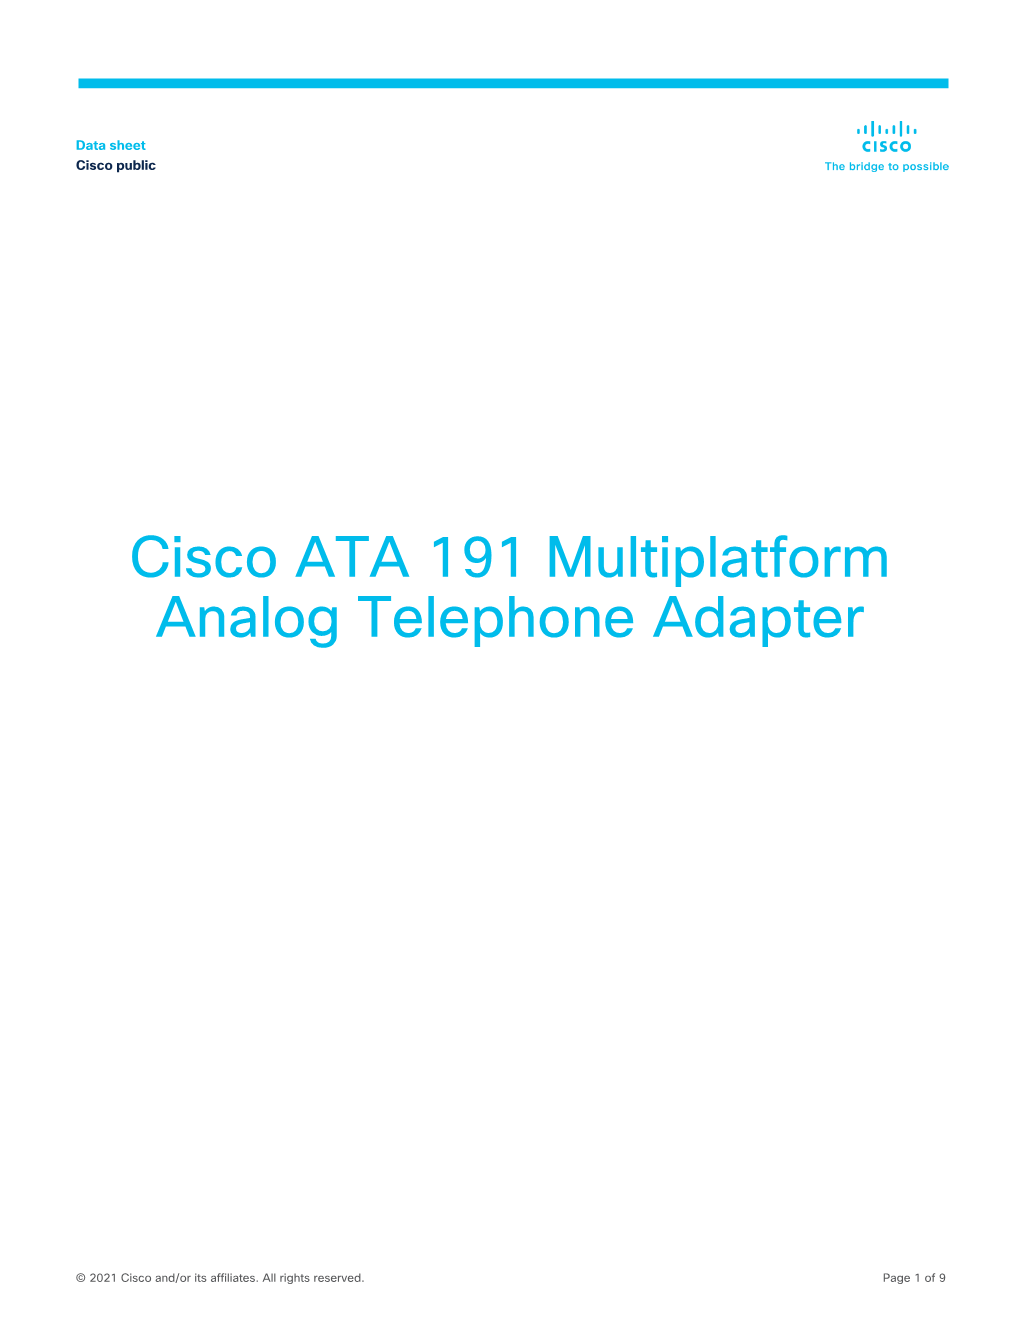 Cisco ATA 191 Multiplatform Analog Telephone Adapter Data Sheet